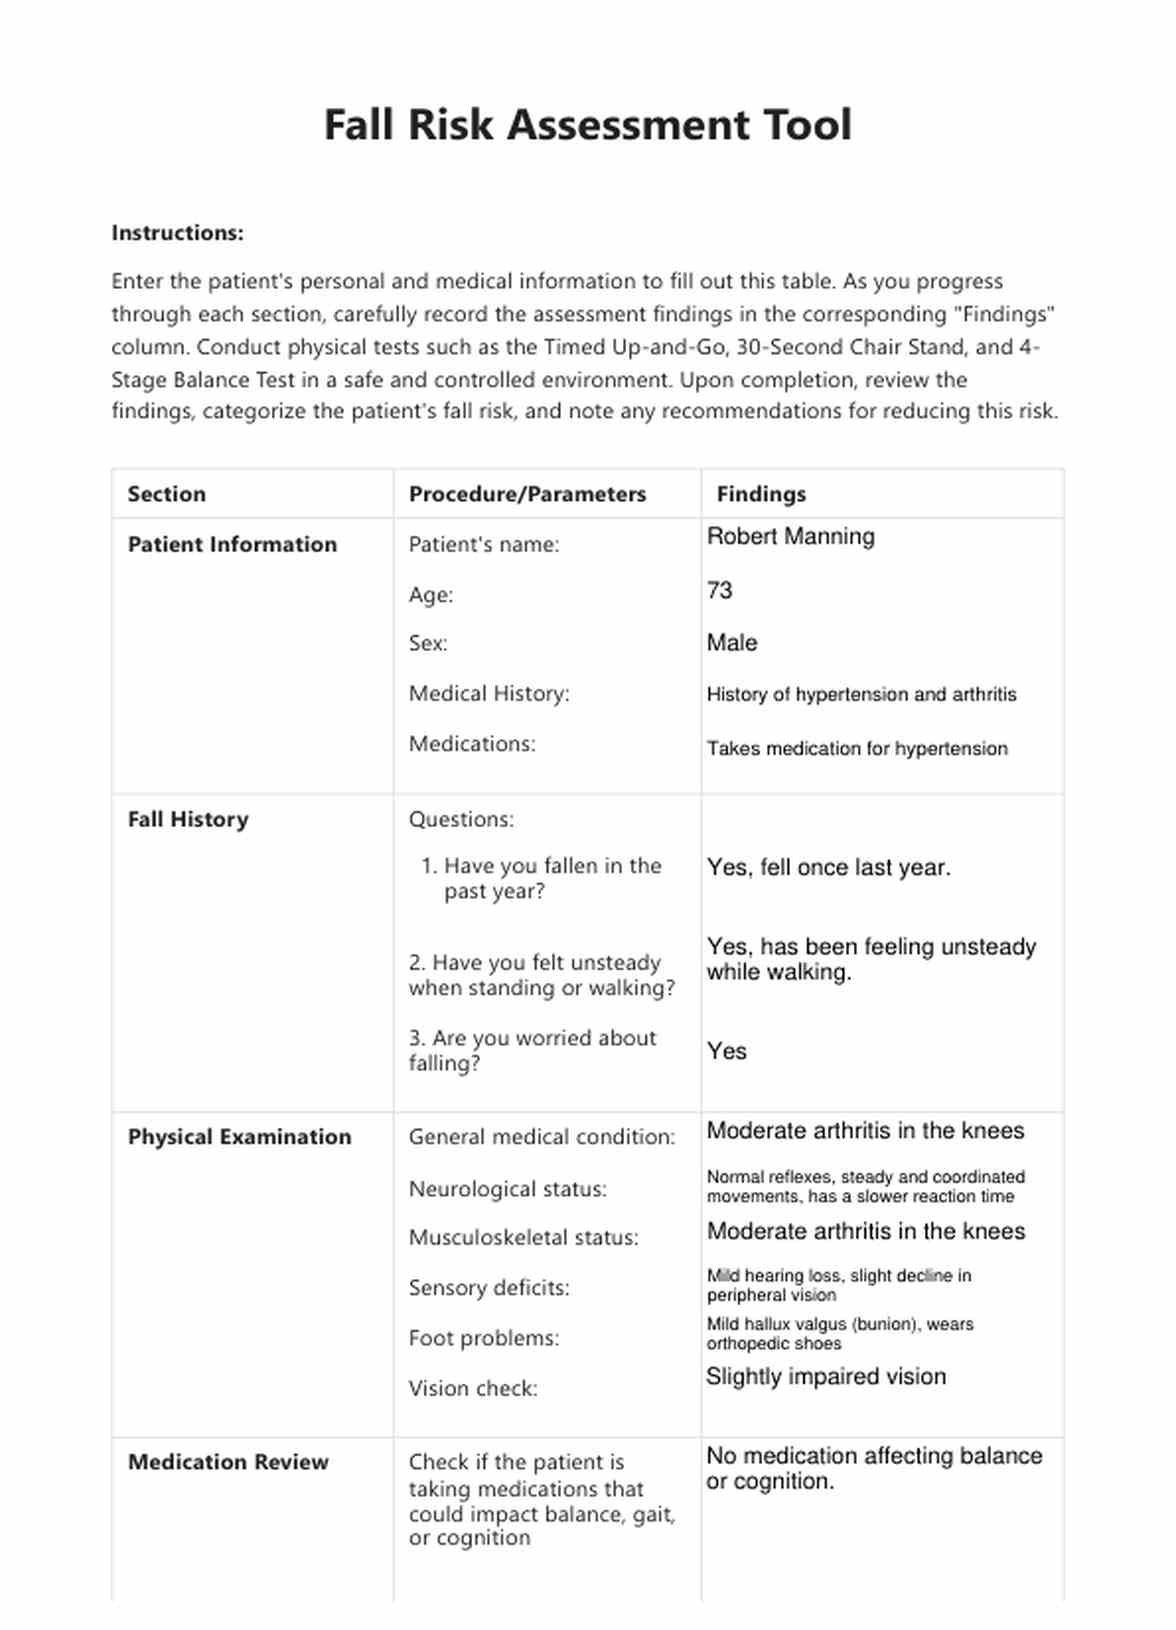 Falls Risk Assessment PDF Example